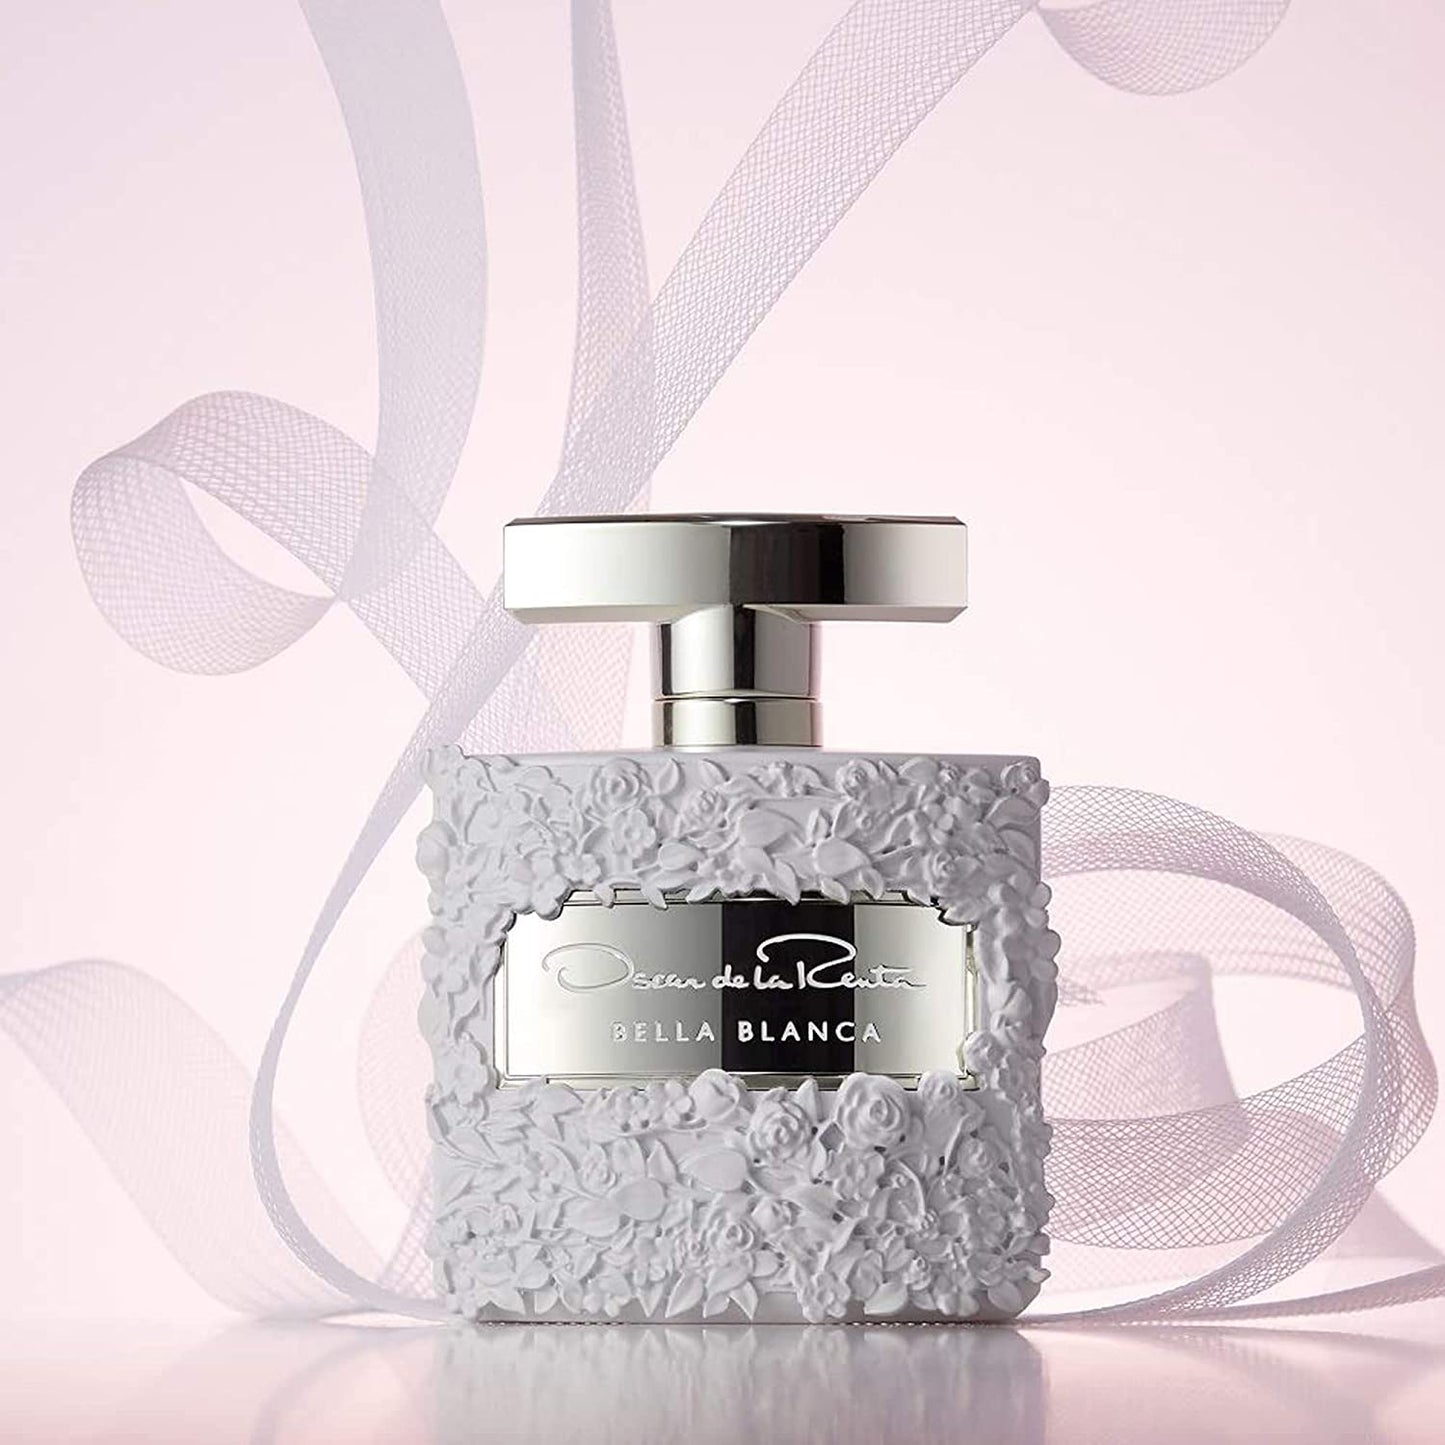 Oscar de la Renta Bella Blanca Eau de Parfum 3 Piece Gift Set for Women - Perfume Spray 3.4 Fl. Oz., & 1.0 Fl. Oz., and Body Lotion 3.4 Fl. Oz.